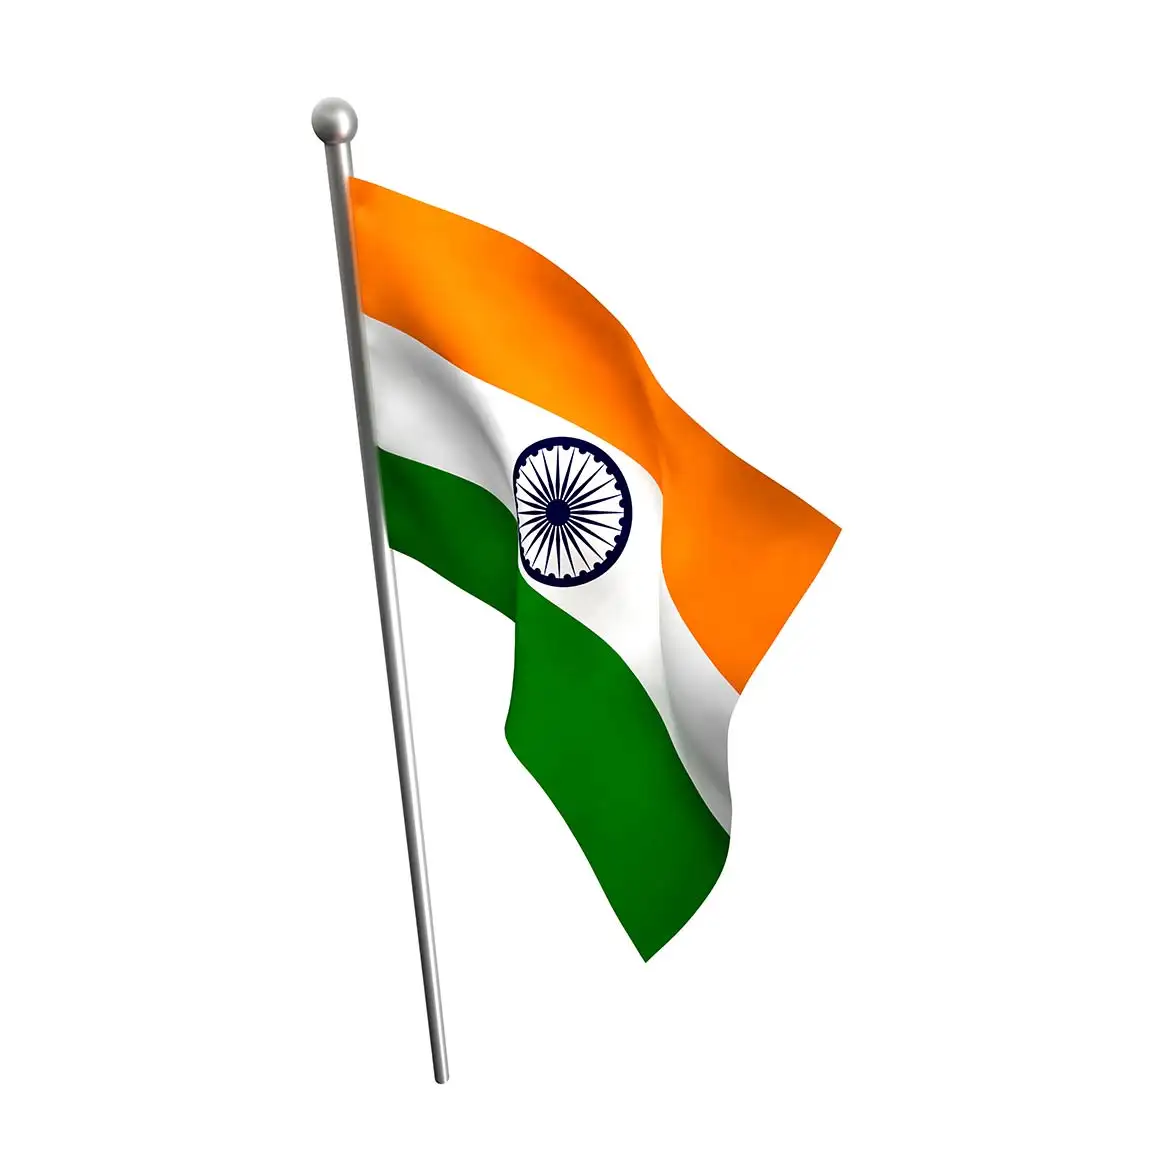 Indian flag images